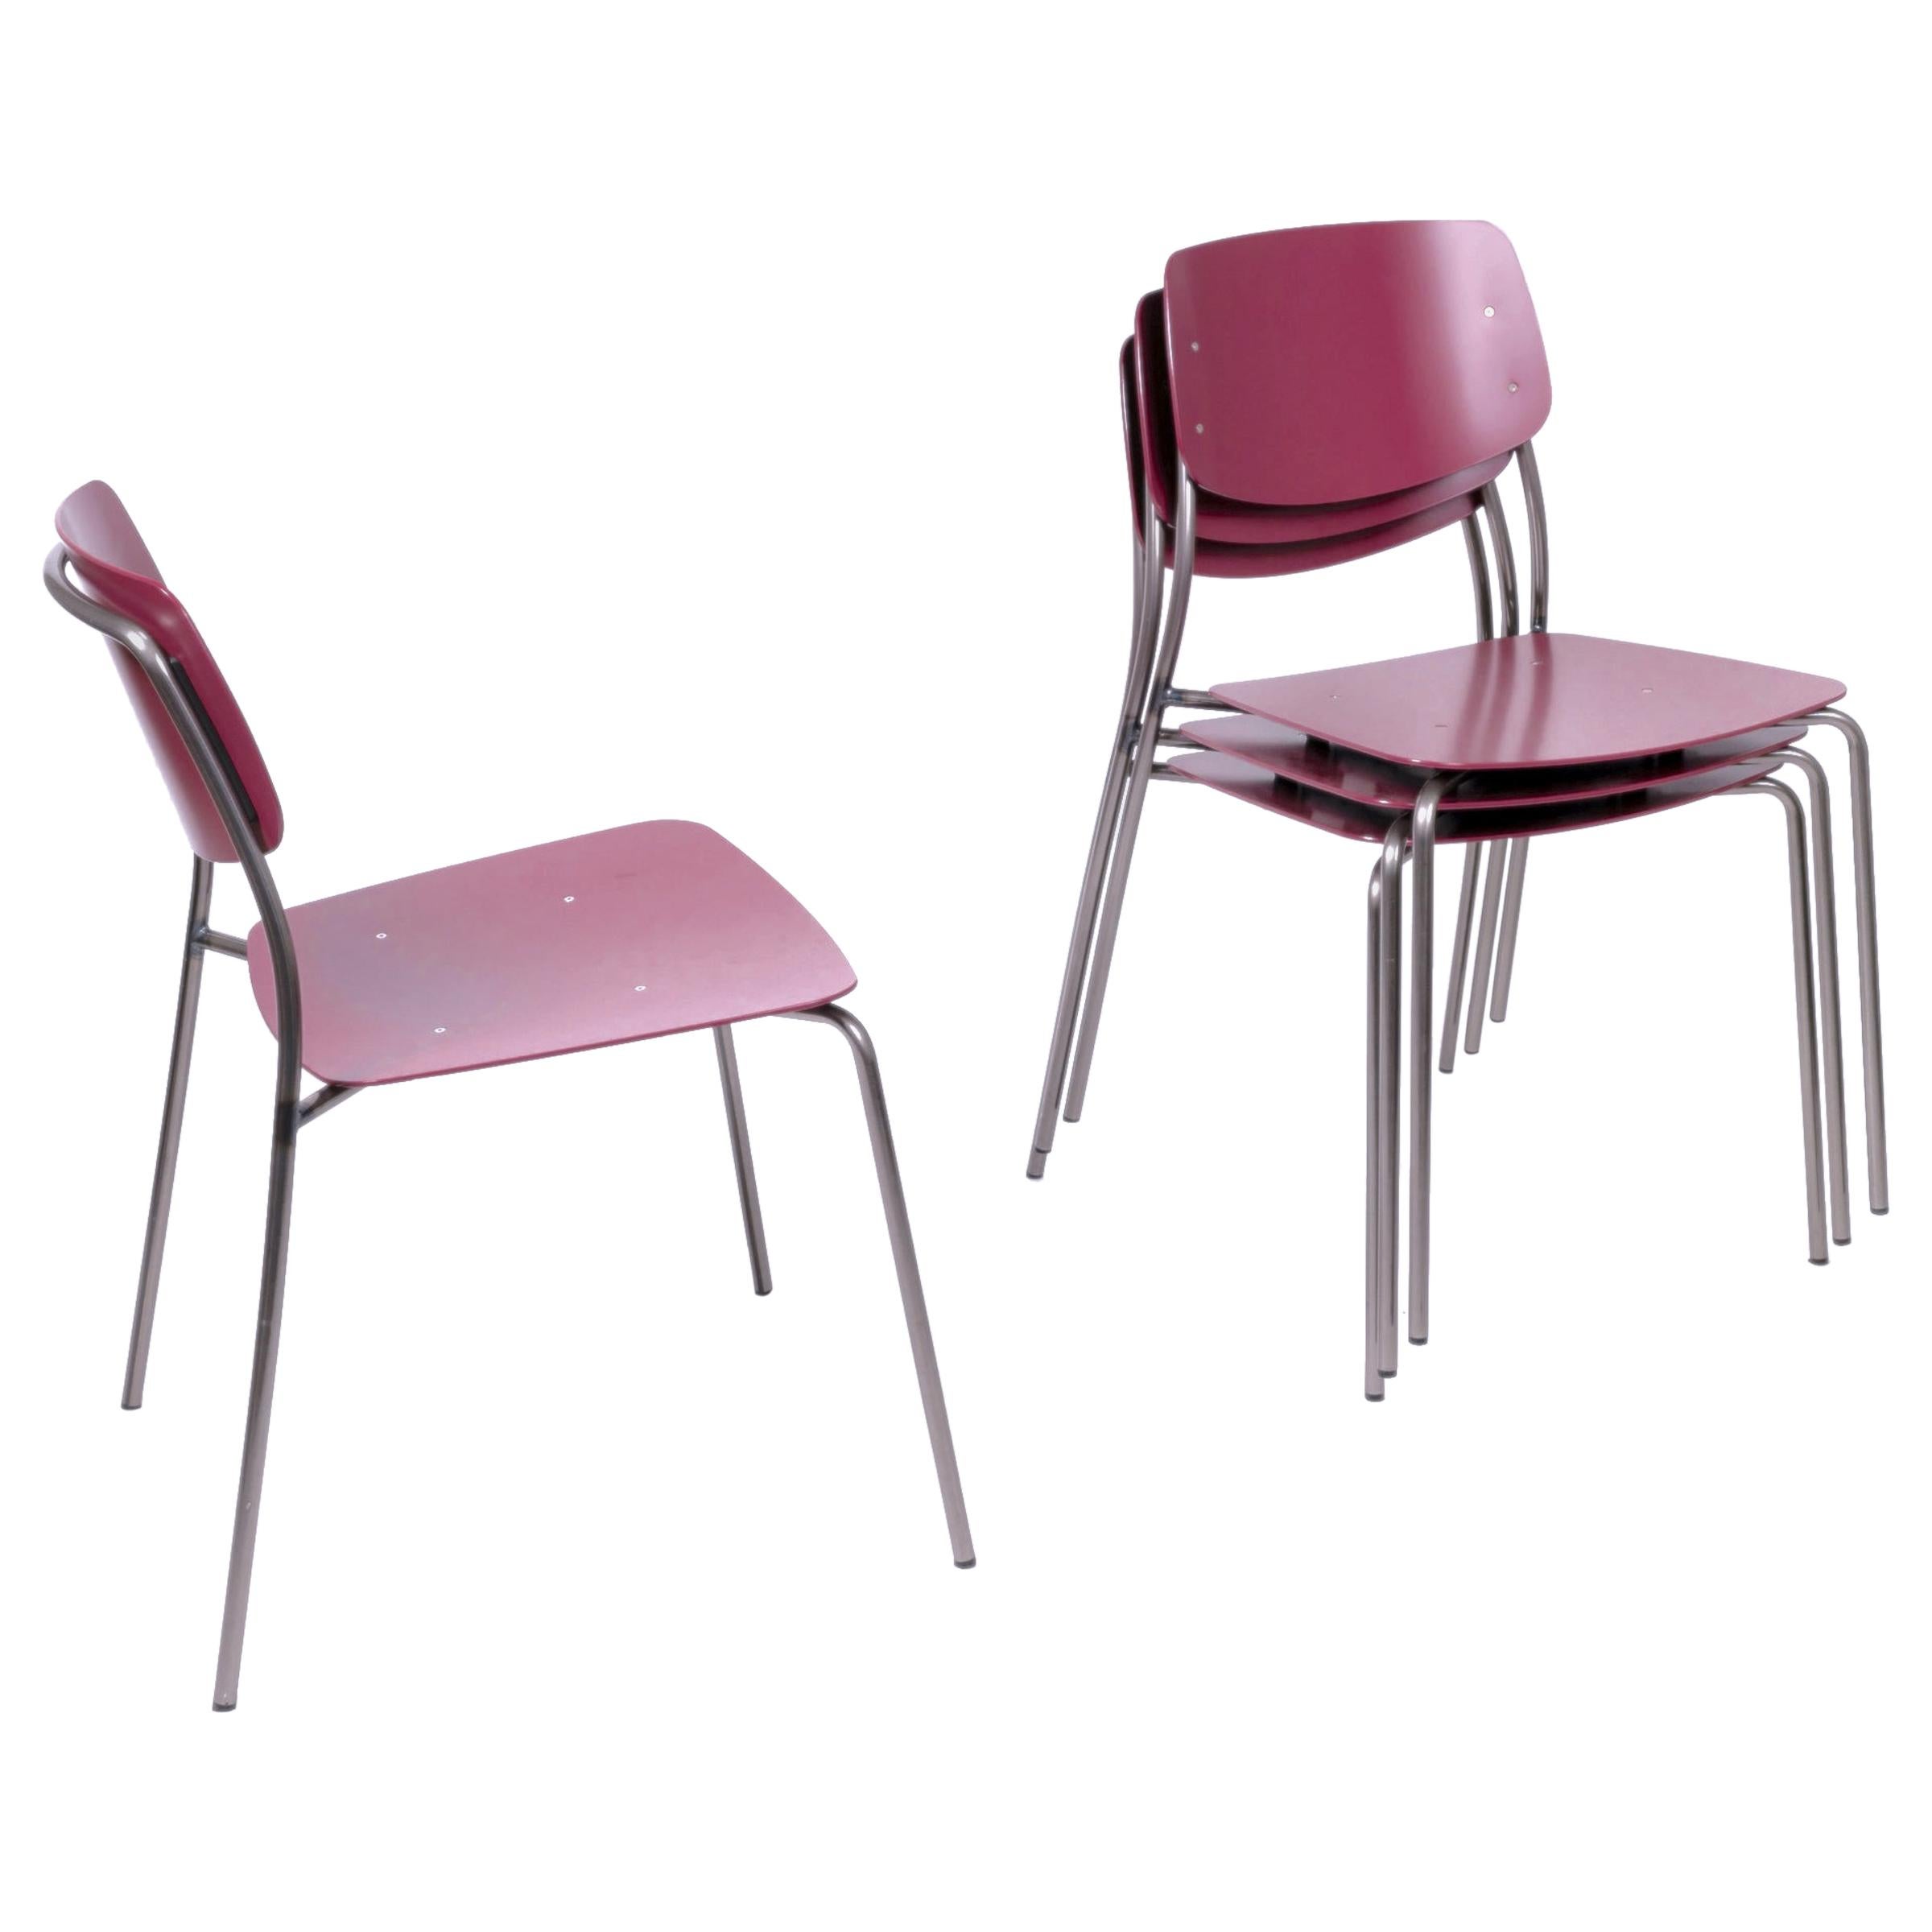 4-Set Aubergine/Wine, Felber C18 Purple Dining Chairs by Dietiker